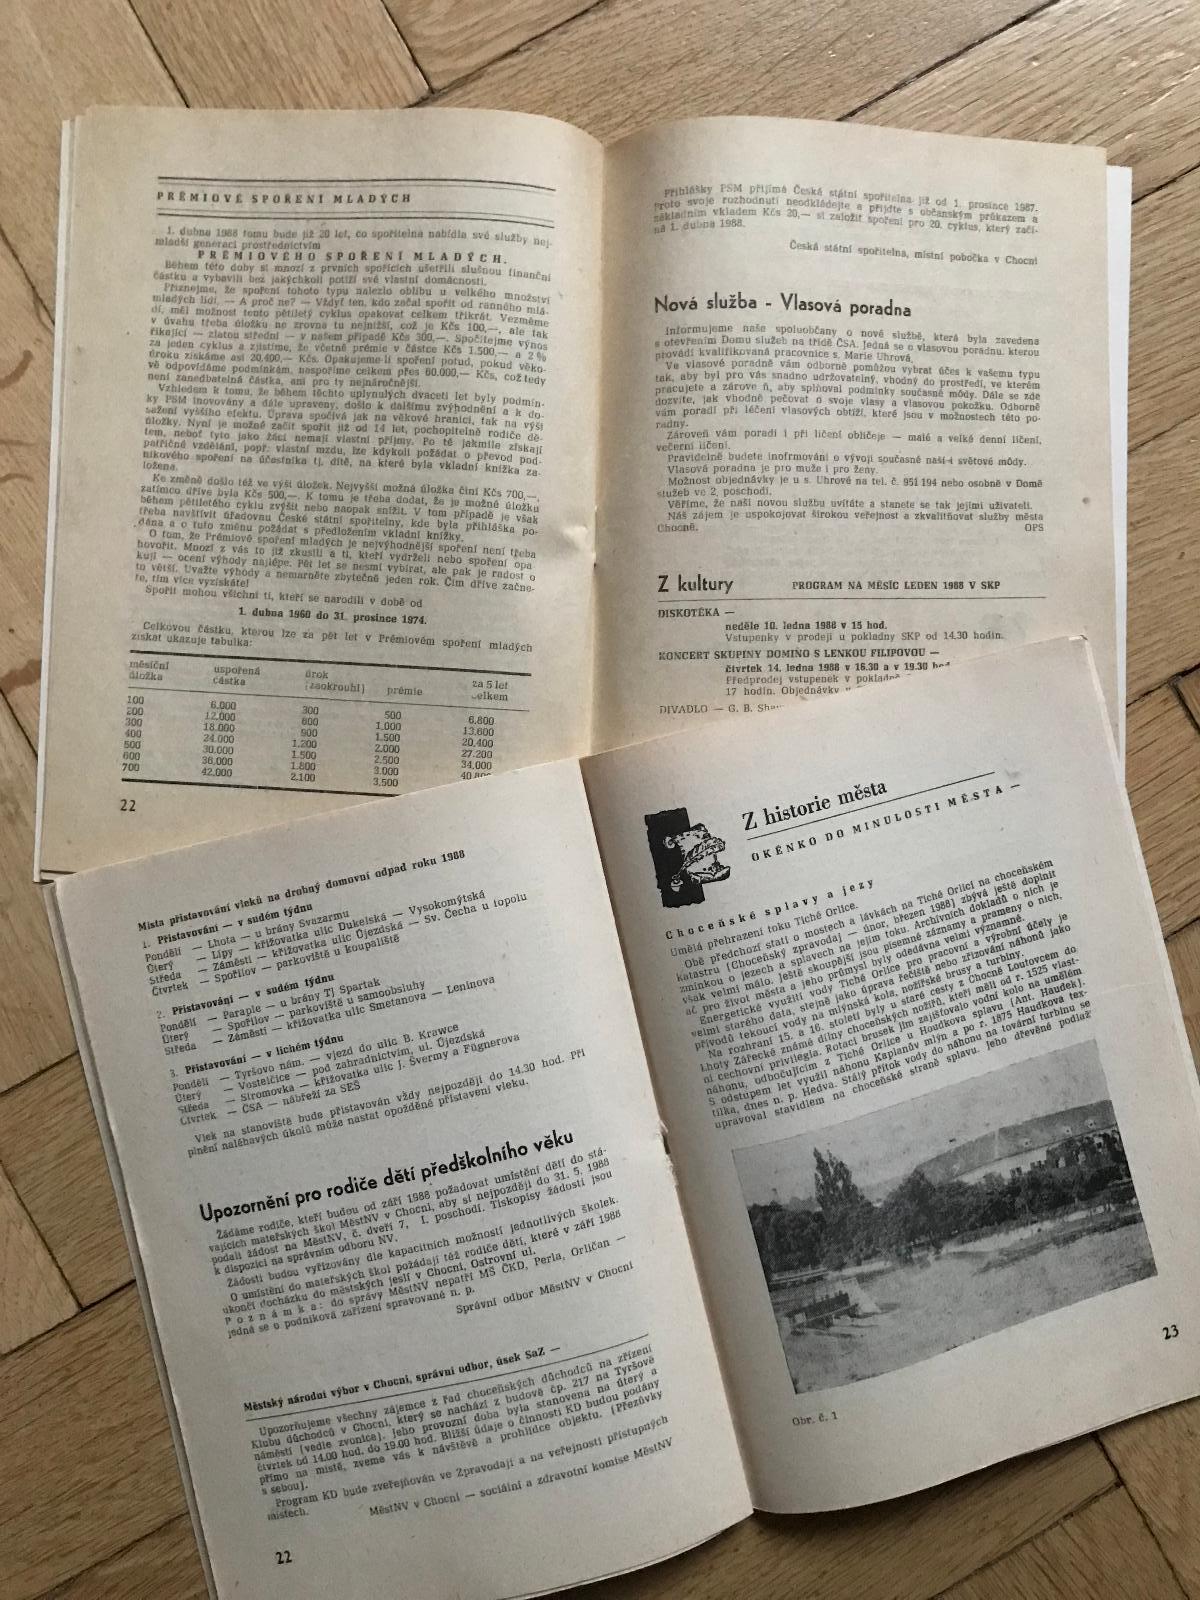 3x Choceň, Choceňský zpravodaj 1988 - Knihy